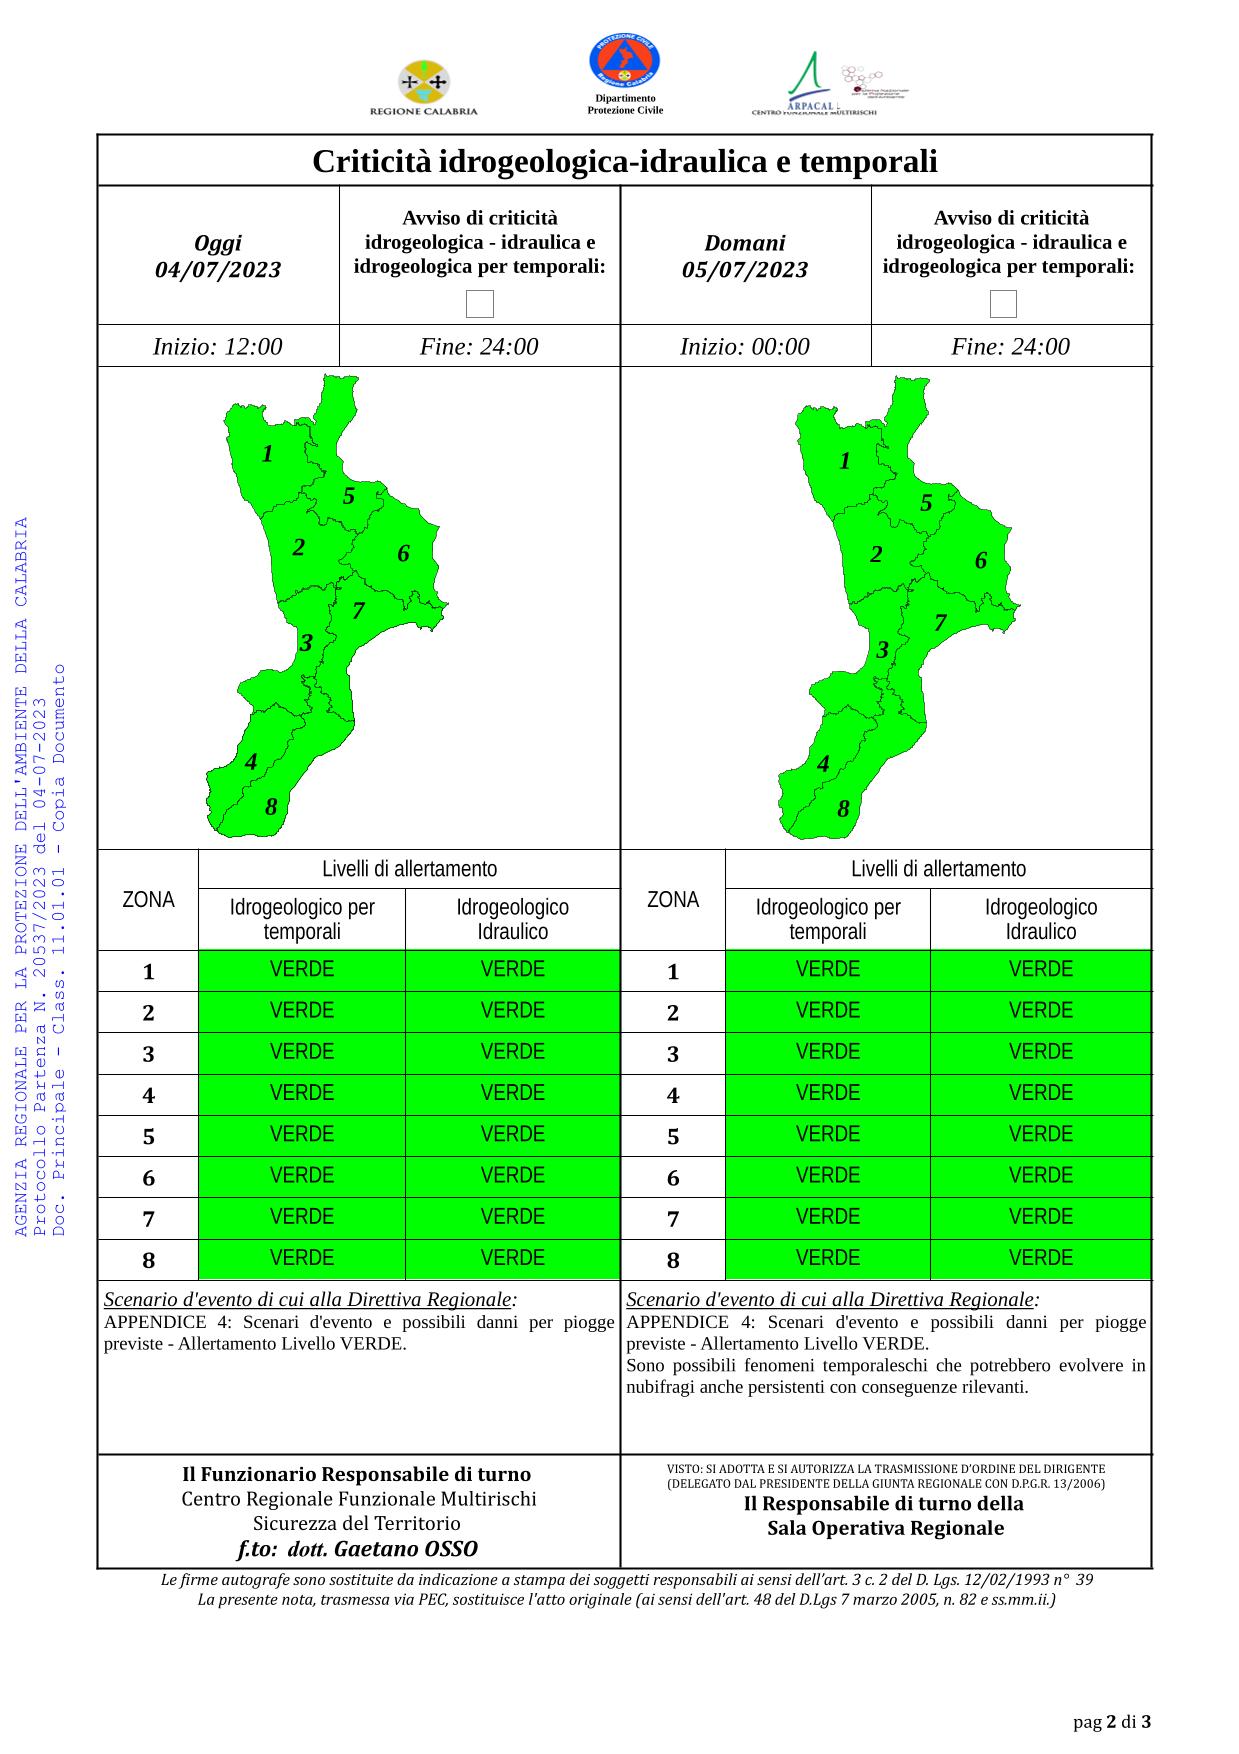 Criticità idrogeologica-idraulica e temporali in Calabria 04-07-2023